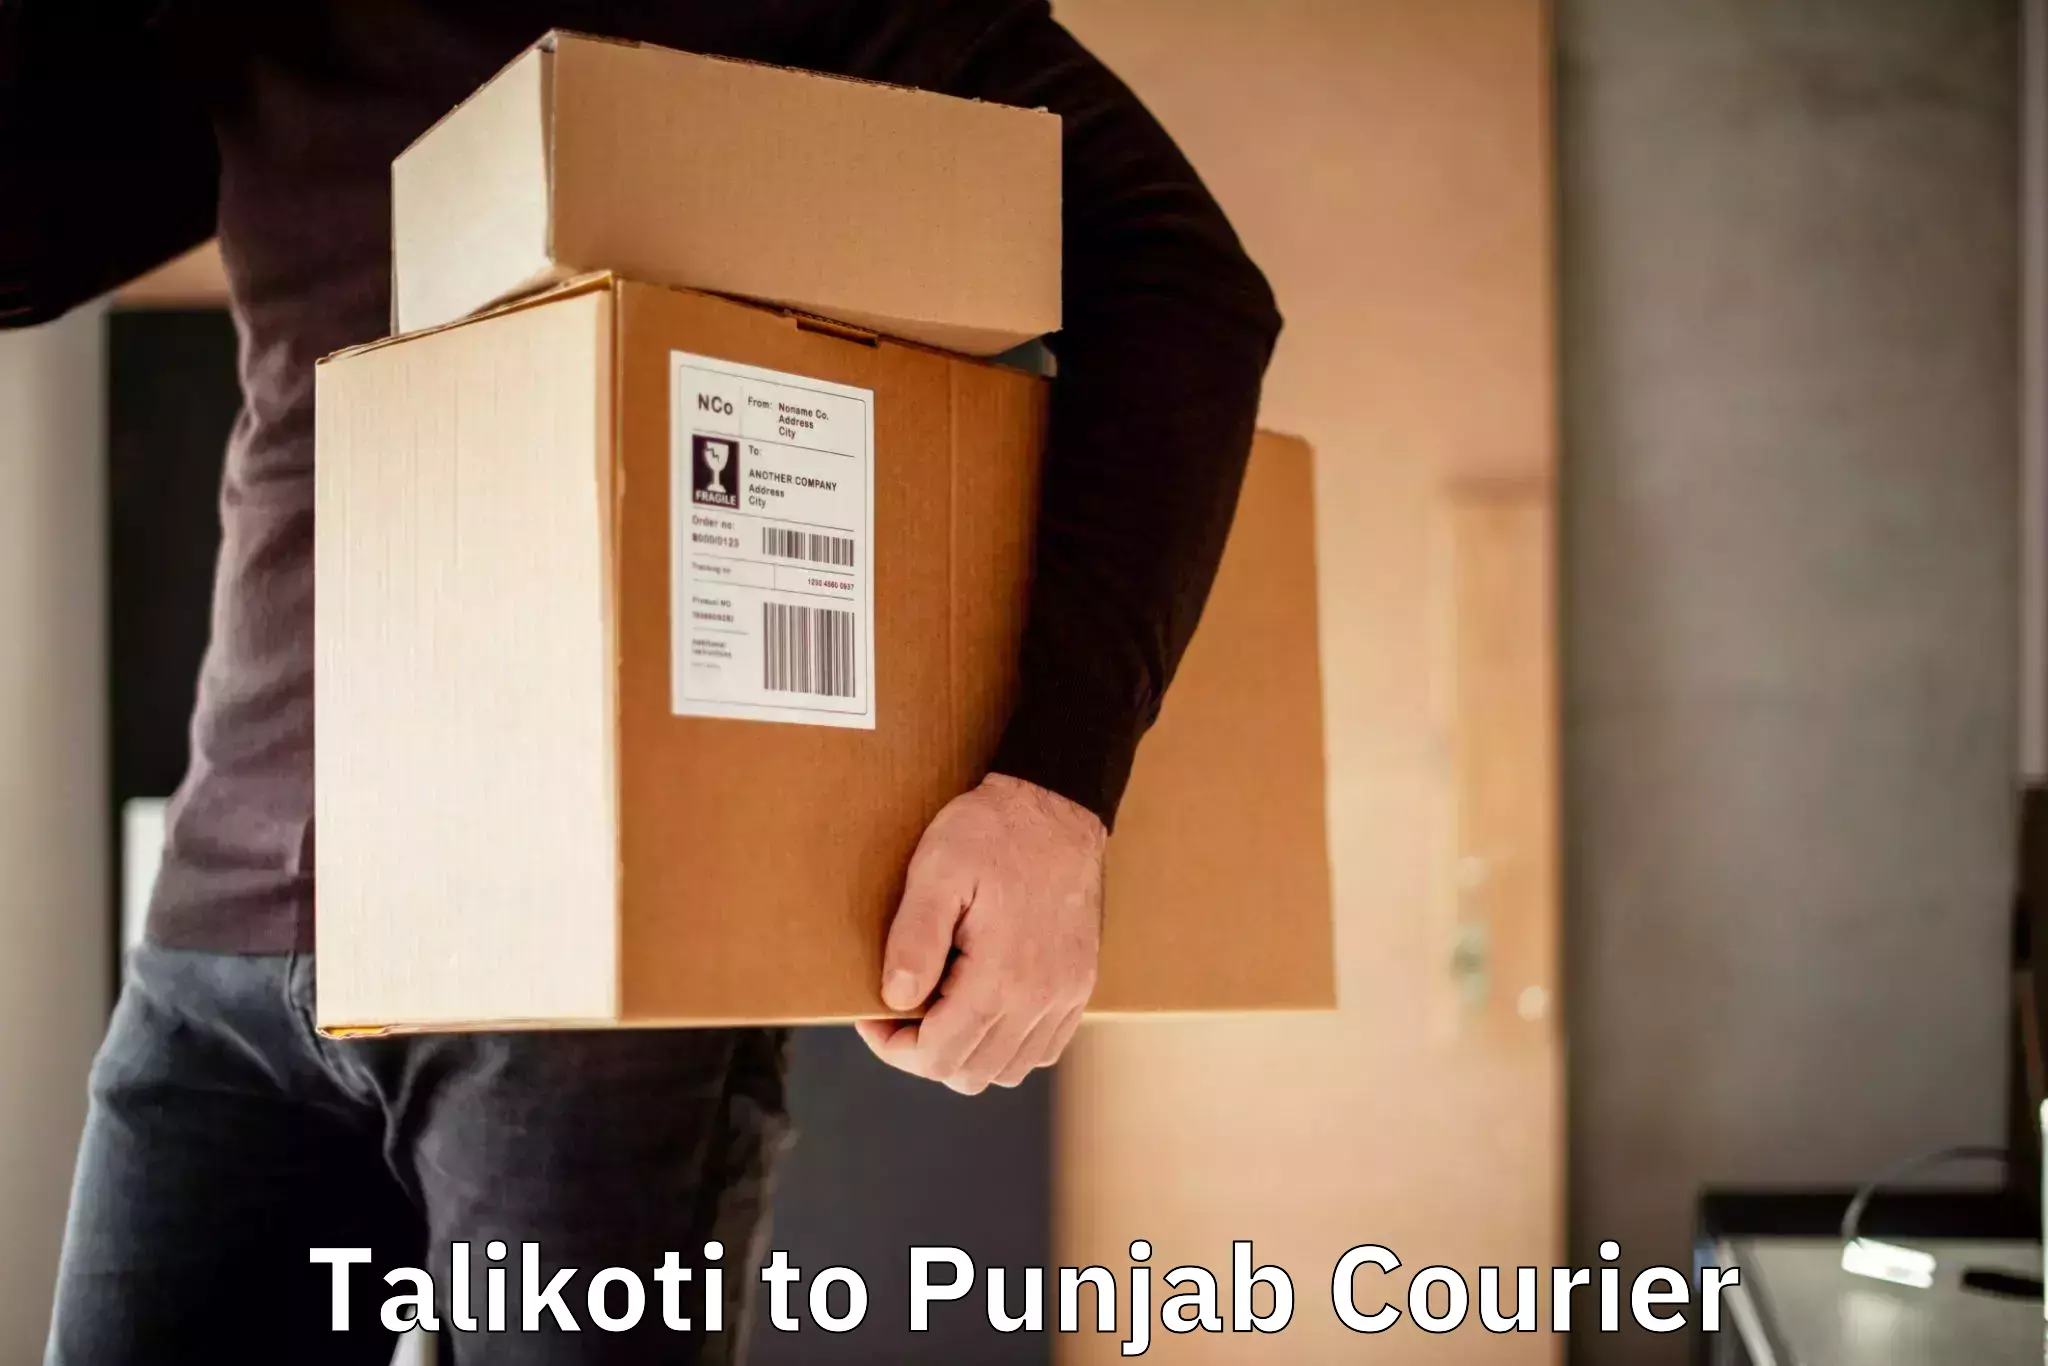 Business shipping needs Talikoti to Zirakpur